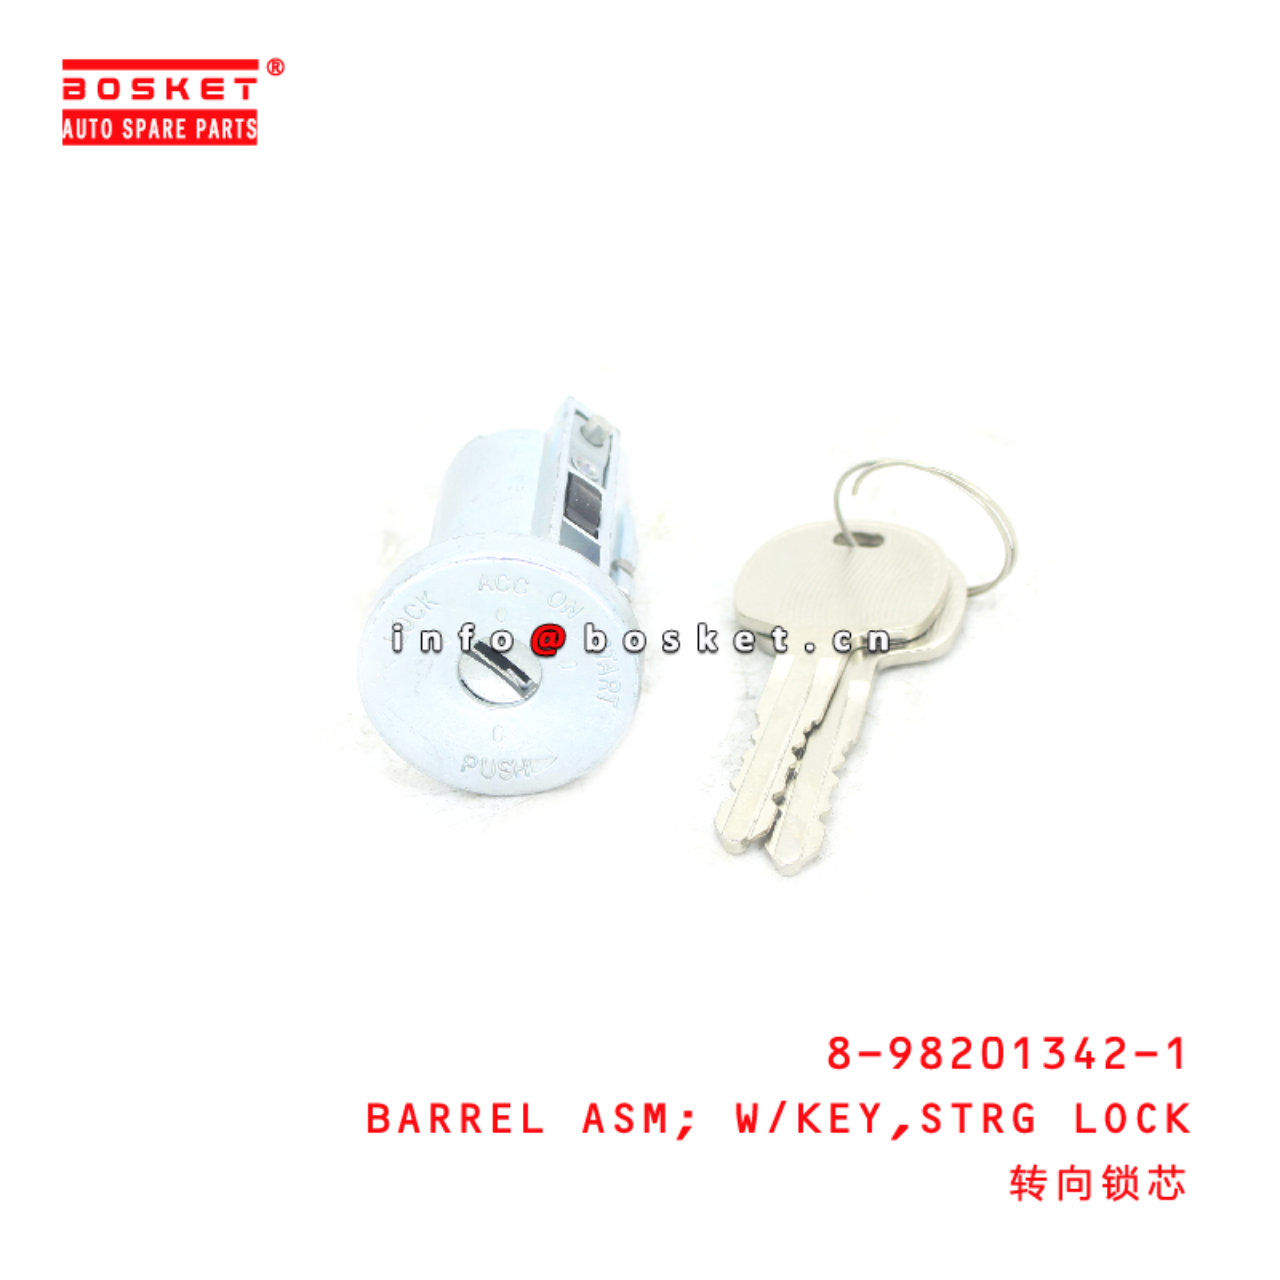 8-98201342-1 Steering Lock With Key Barrel Assembl...